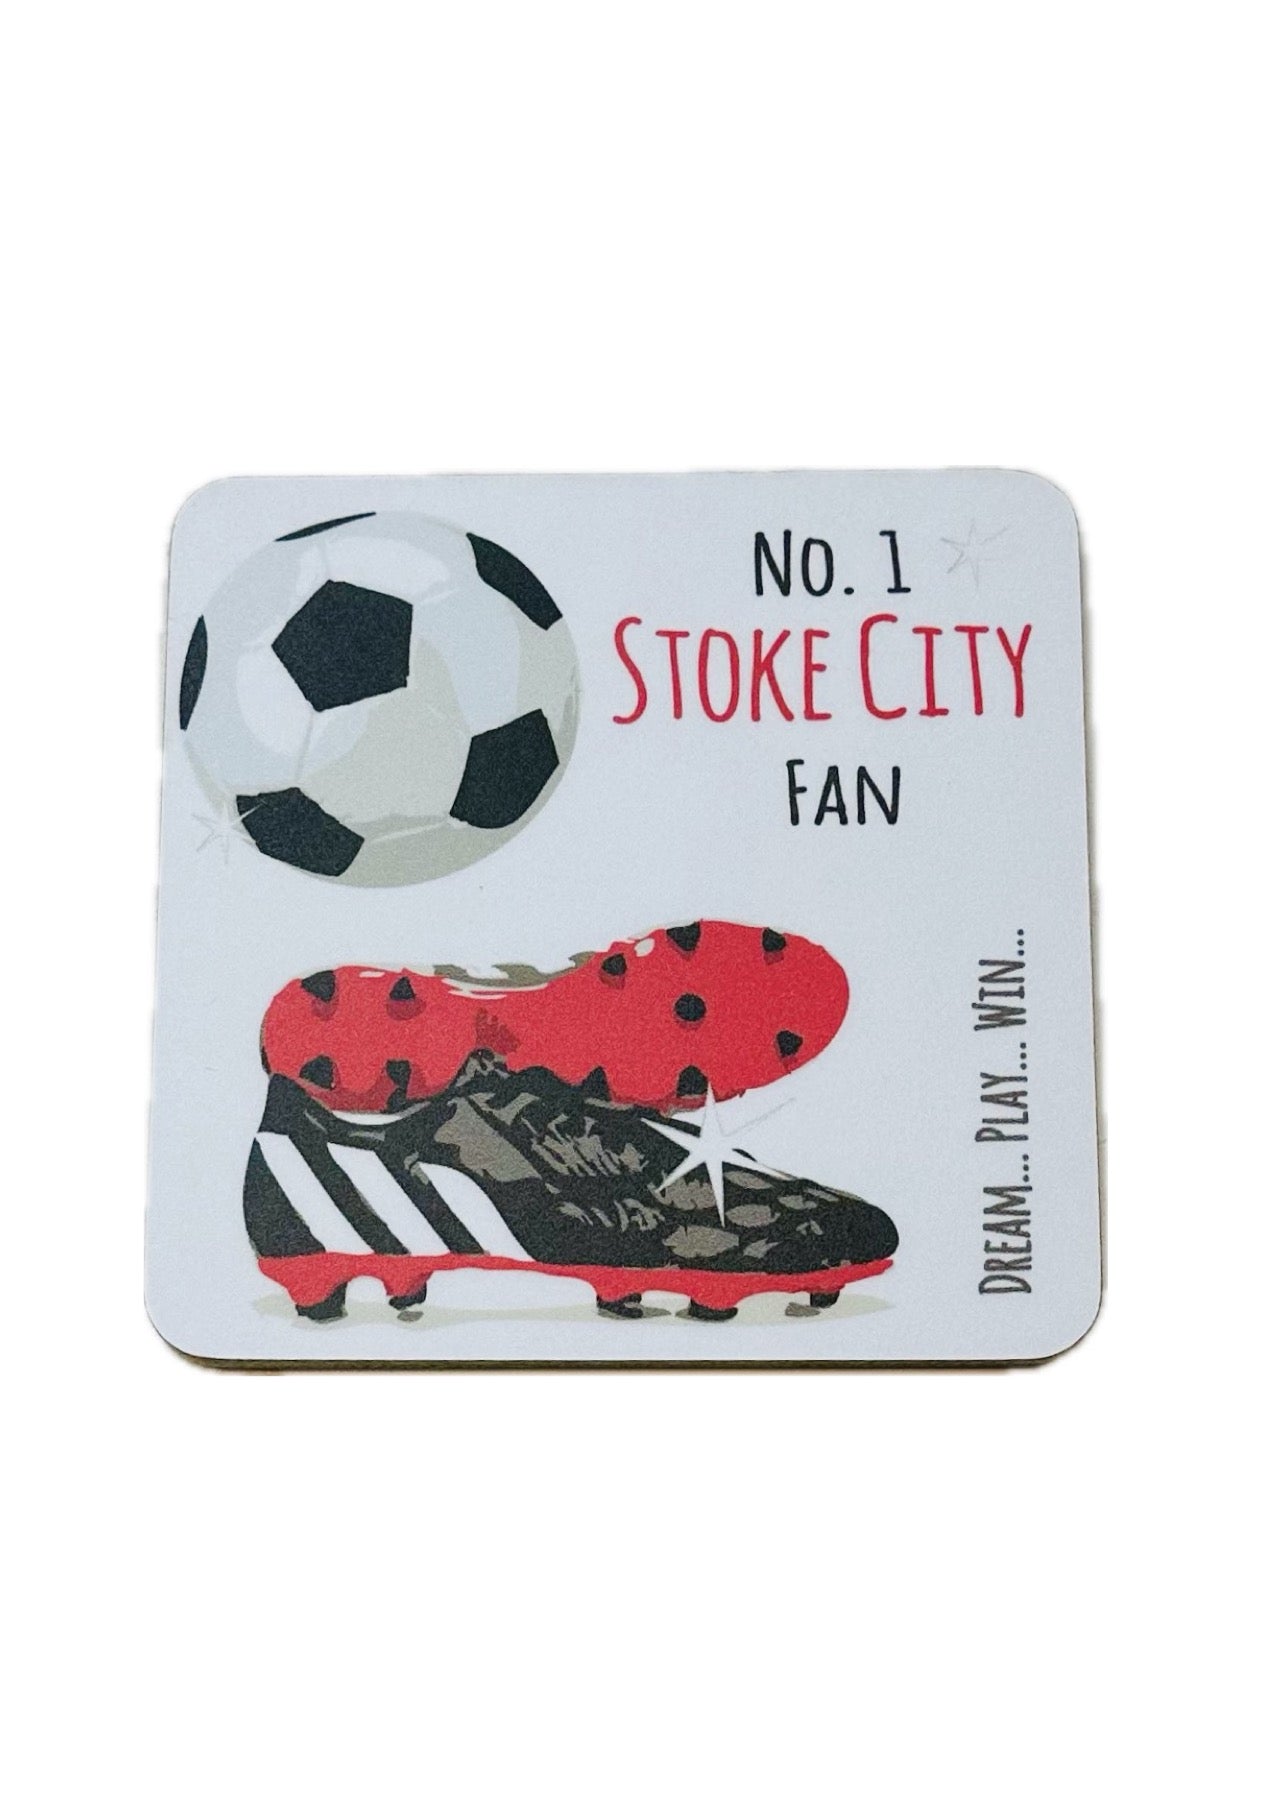 Stoke City No 1 Fan Magnet - White Cotton Cards